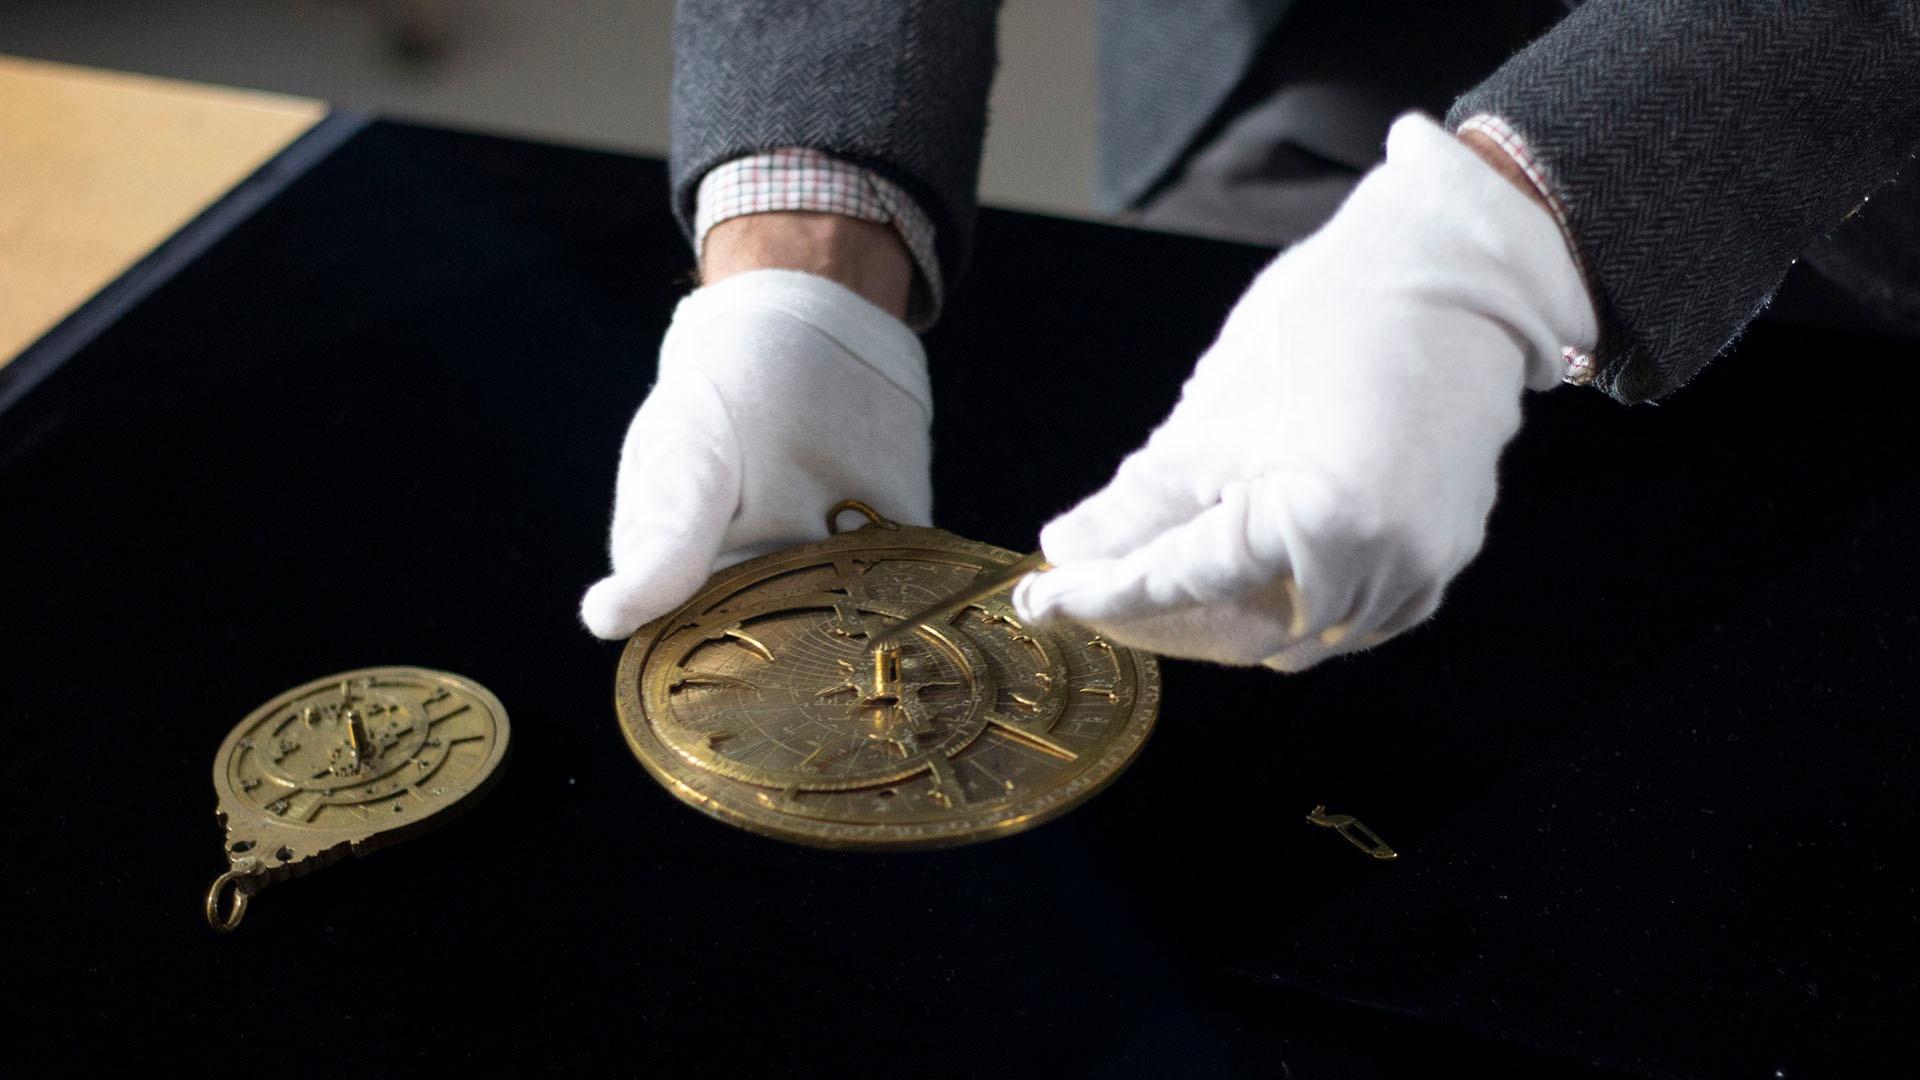 Persian planispheric astrolabe at CHSI, Harvard University.